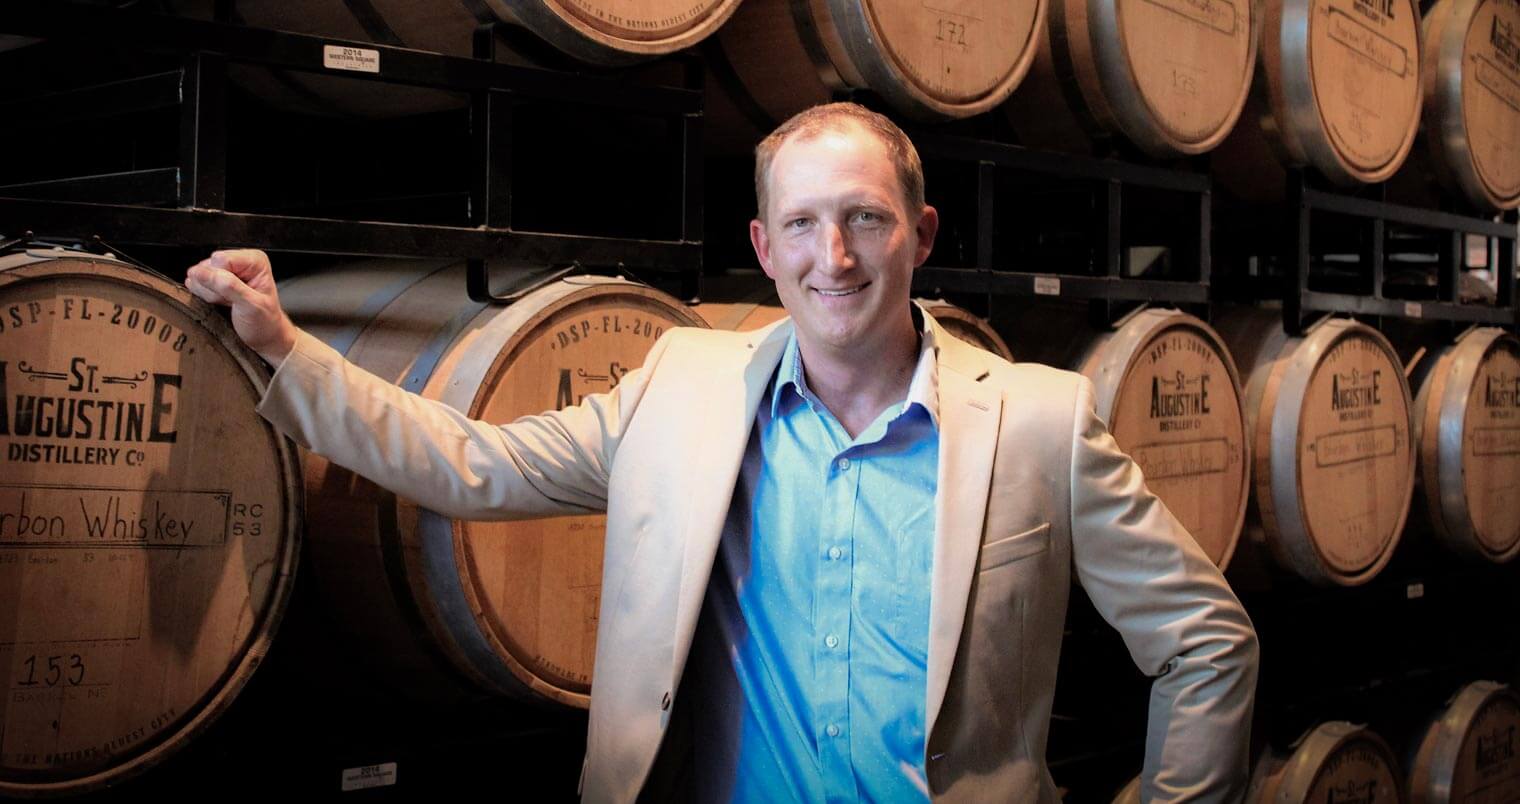 St. Augustine Distillery Announces Matt Stevens as New GM, featured image